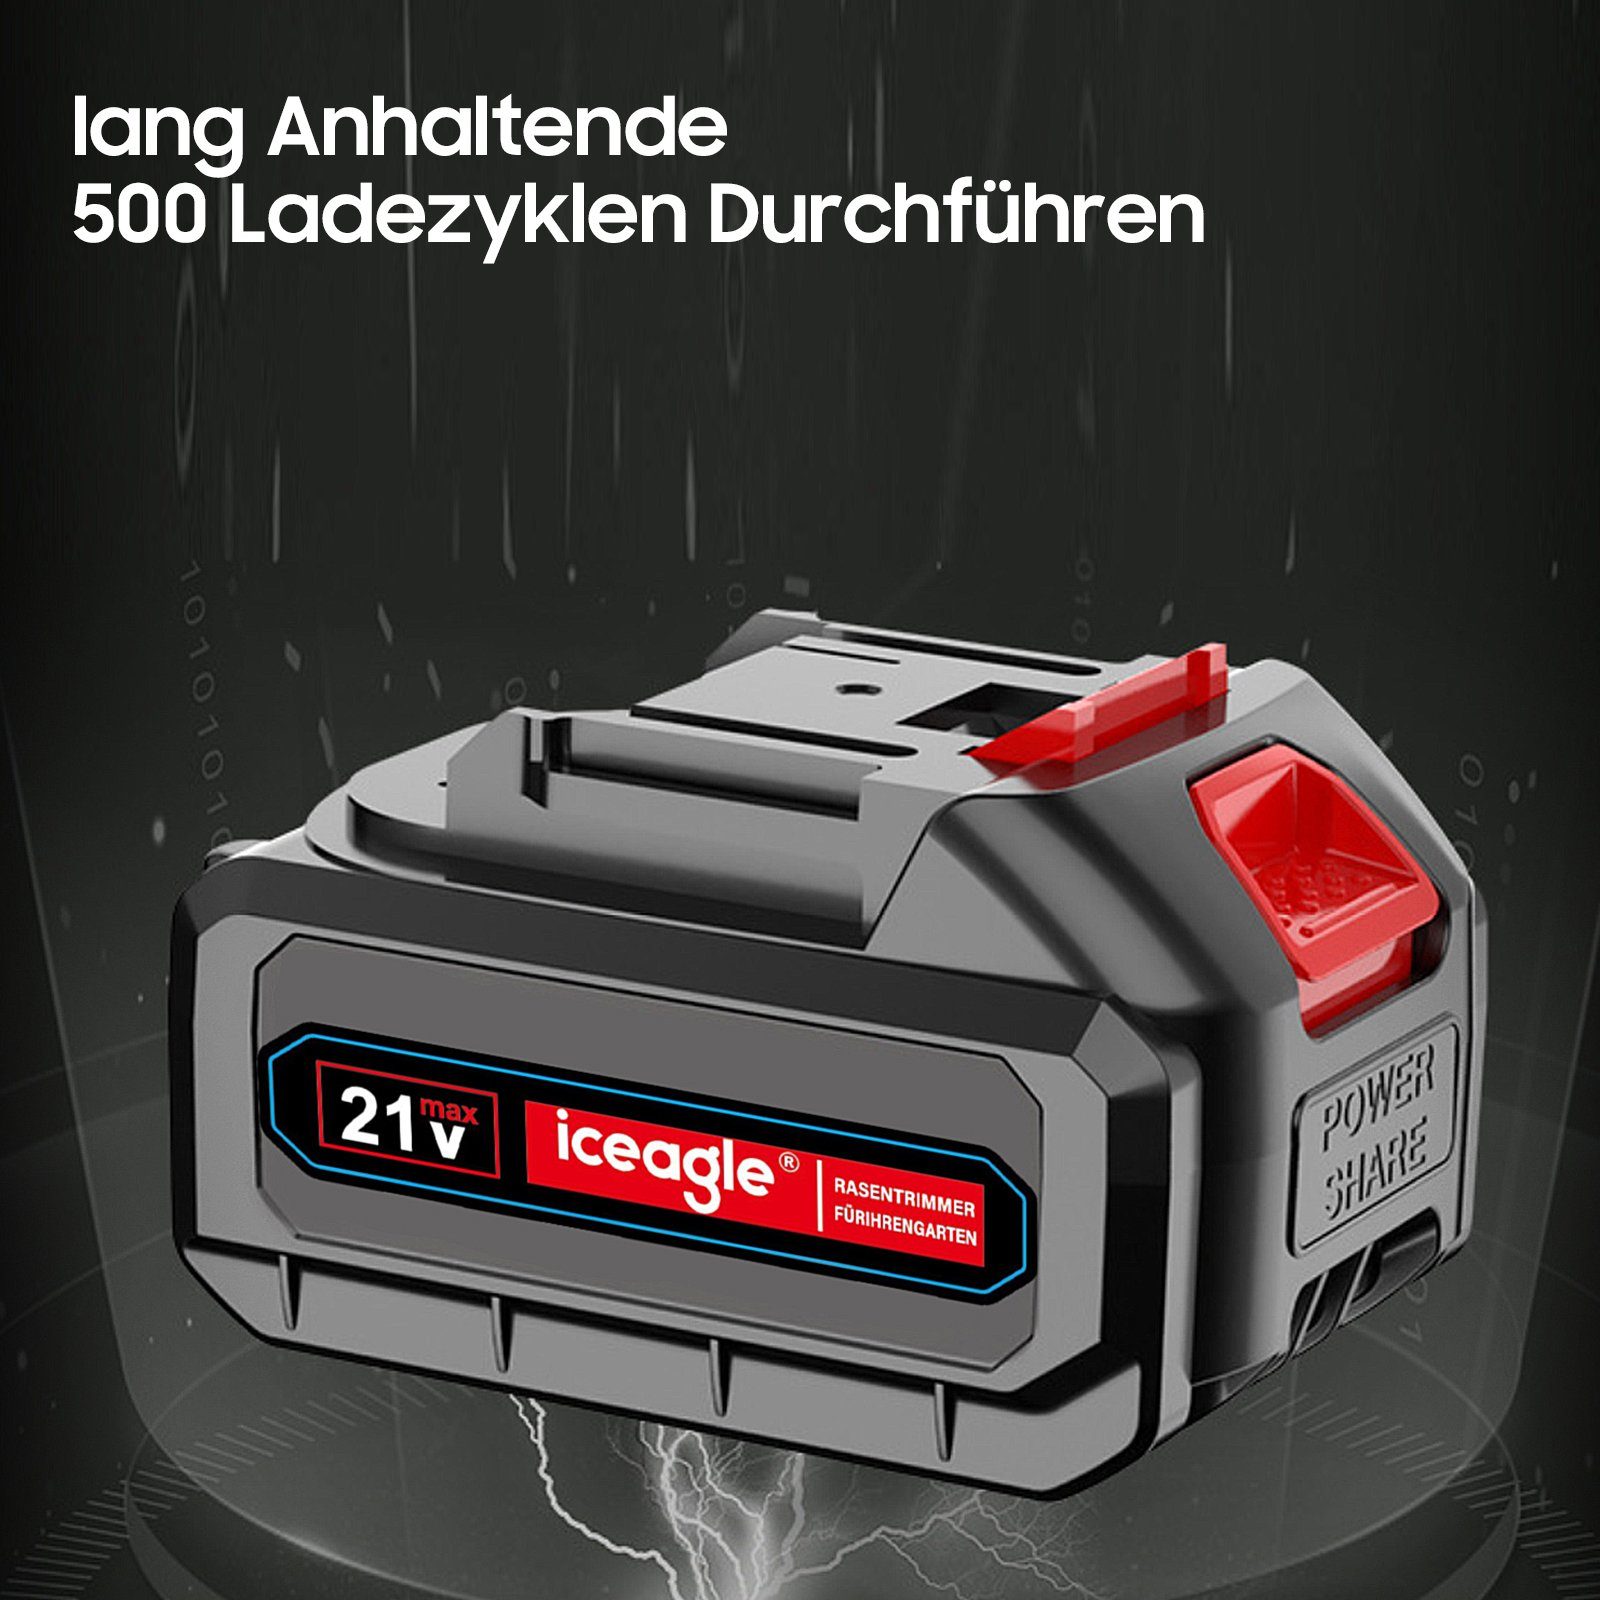 Aoucheni Lithium-Batterie, Ersatzbatterie für Rasenmäher, Akkus 21V/2Ah für 21V/2Ah Batterie, Rasenmäher, schnurlose